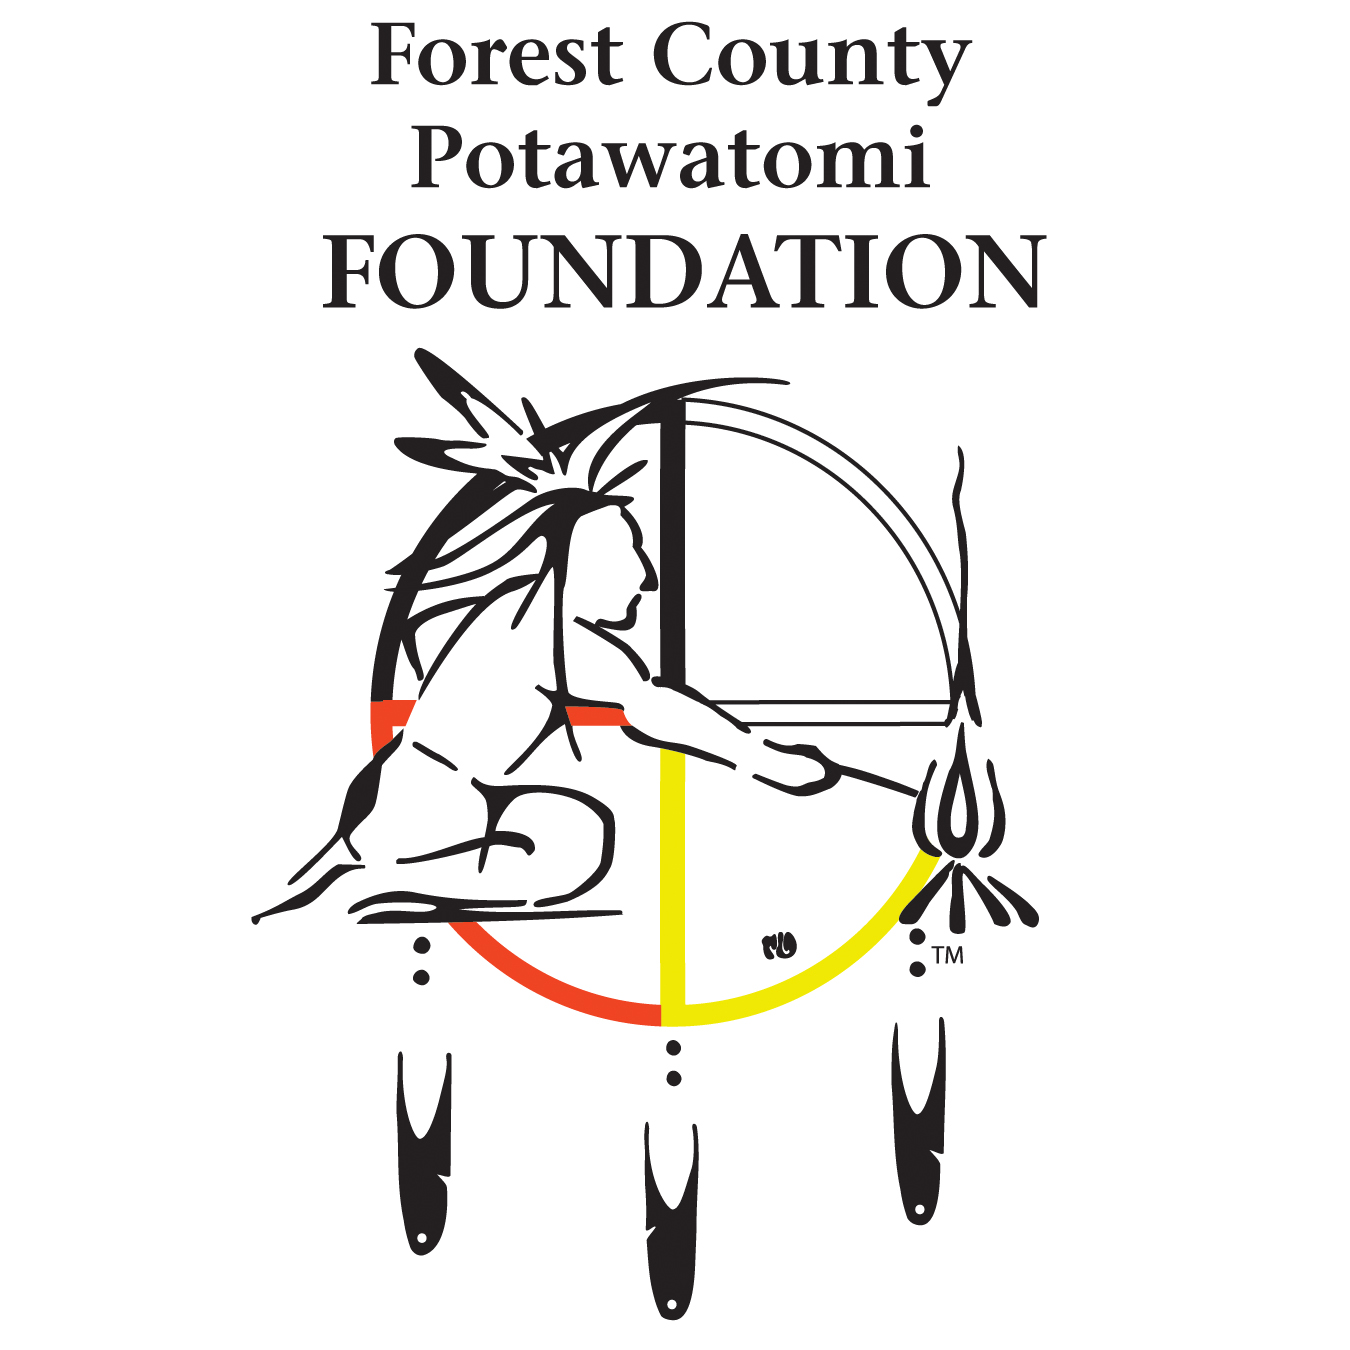 Forest County Potawatomi Foundation